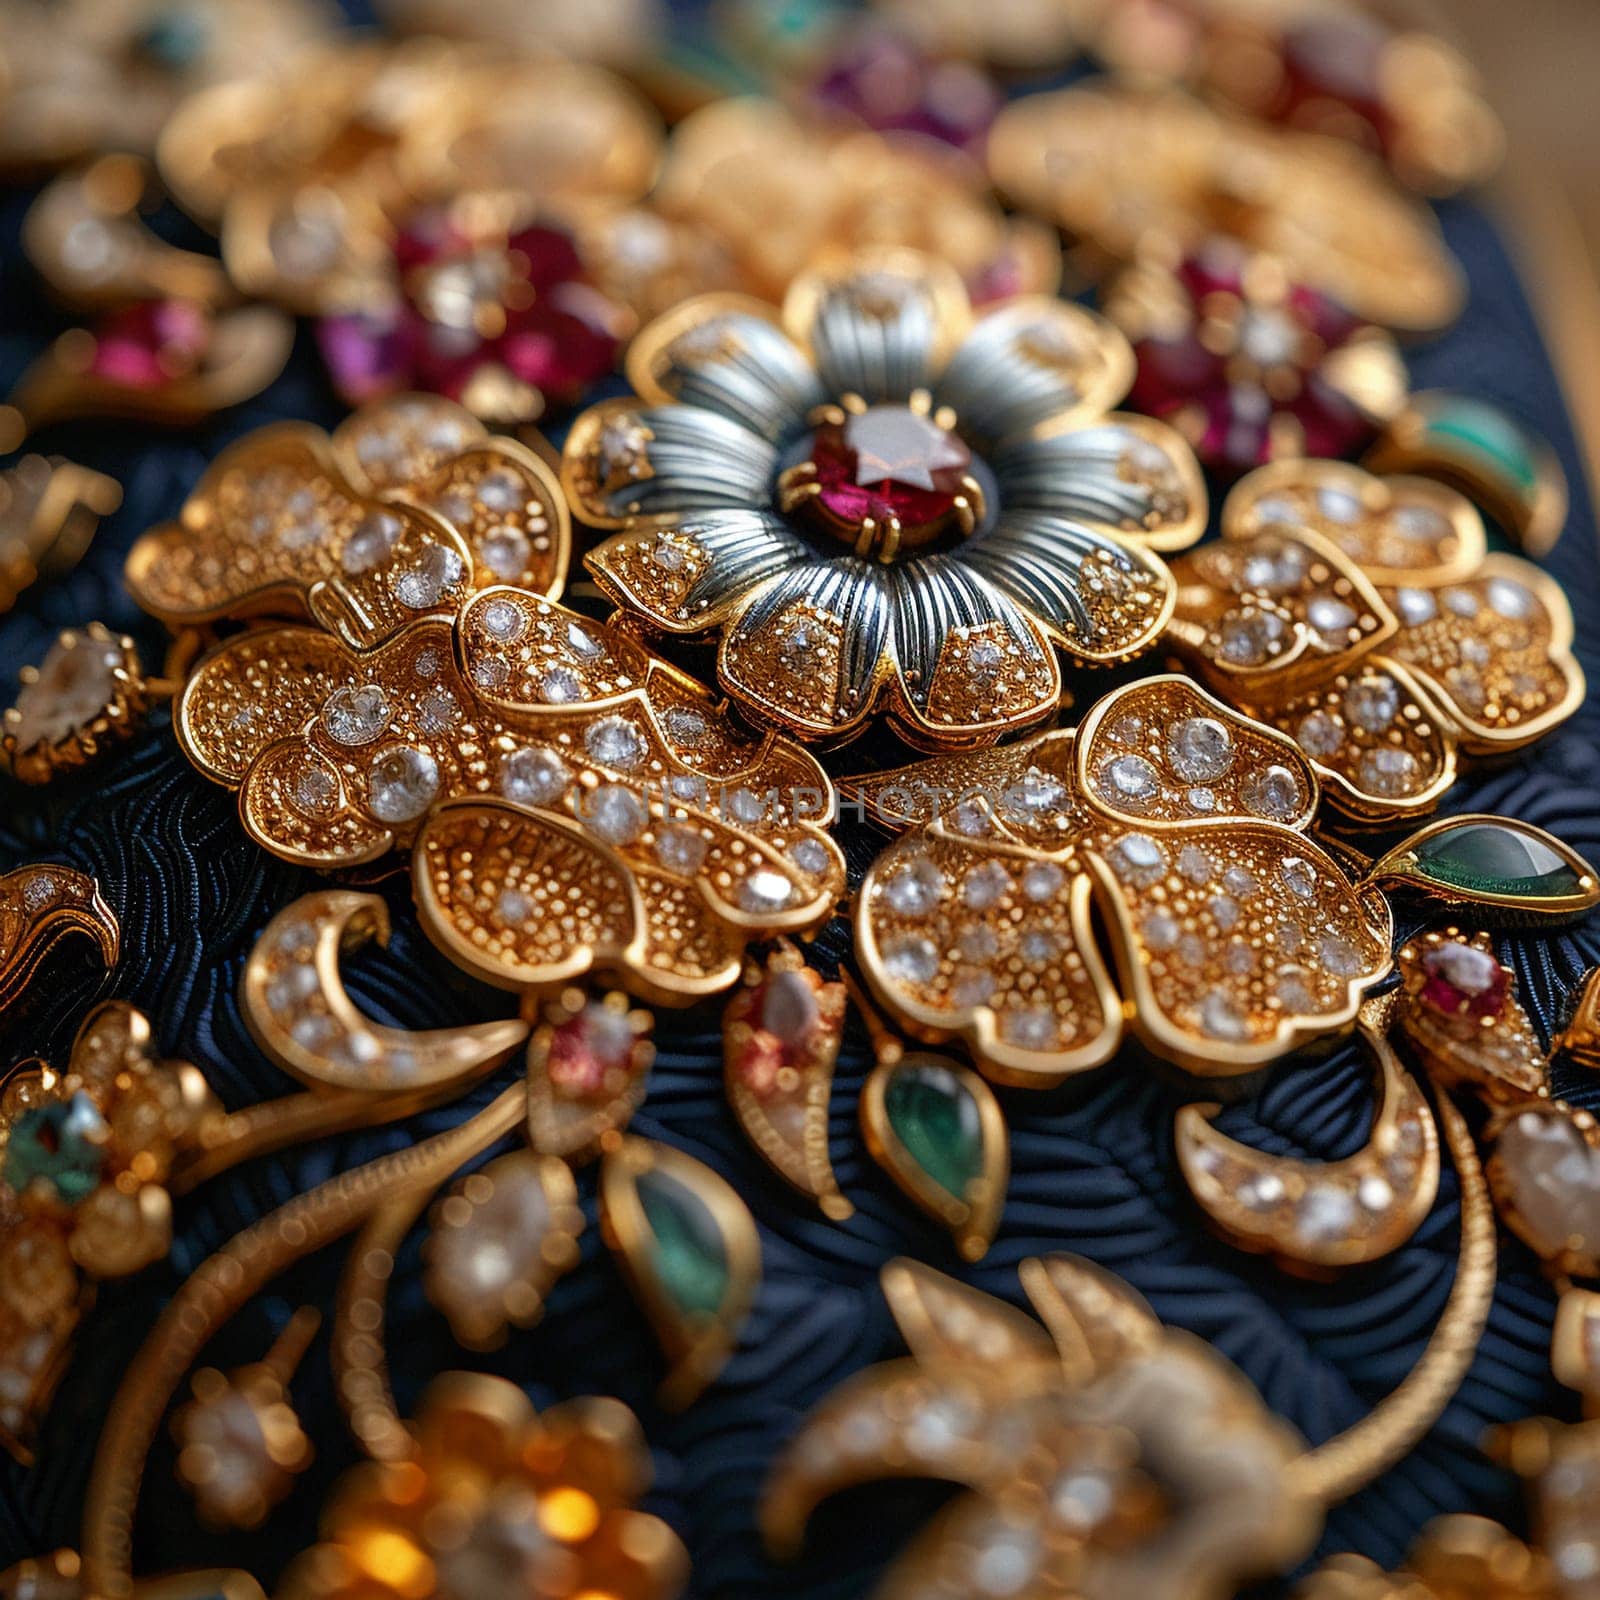 Close-up of intricate jewelry, symbolizing luxury and fashion.